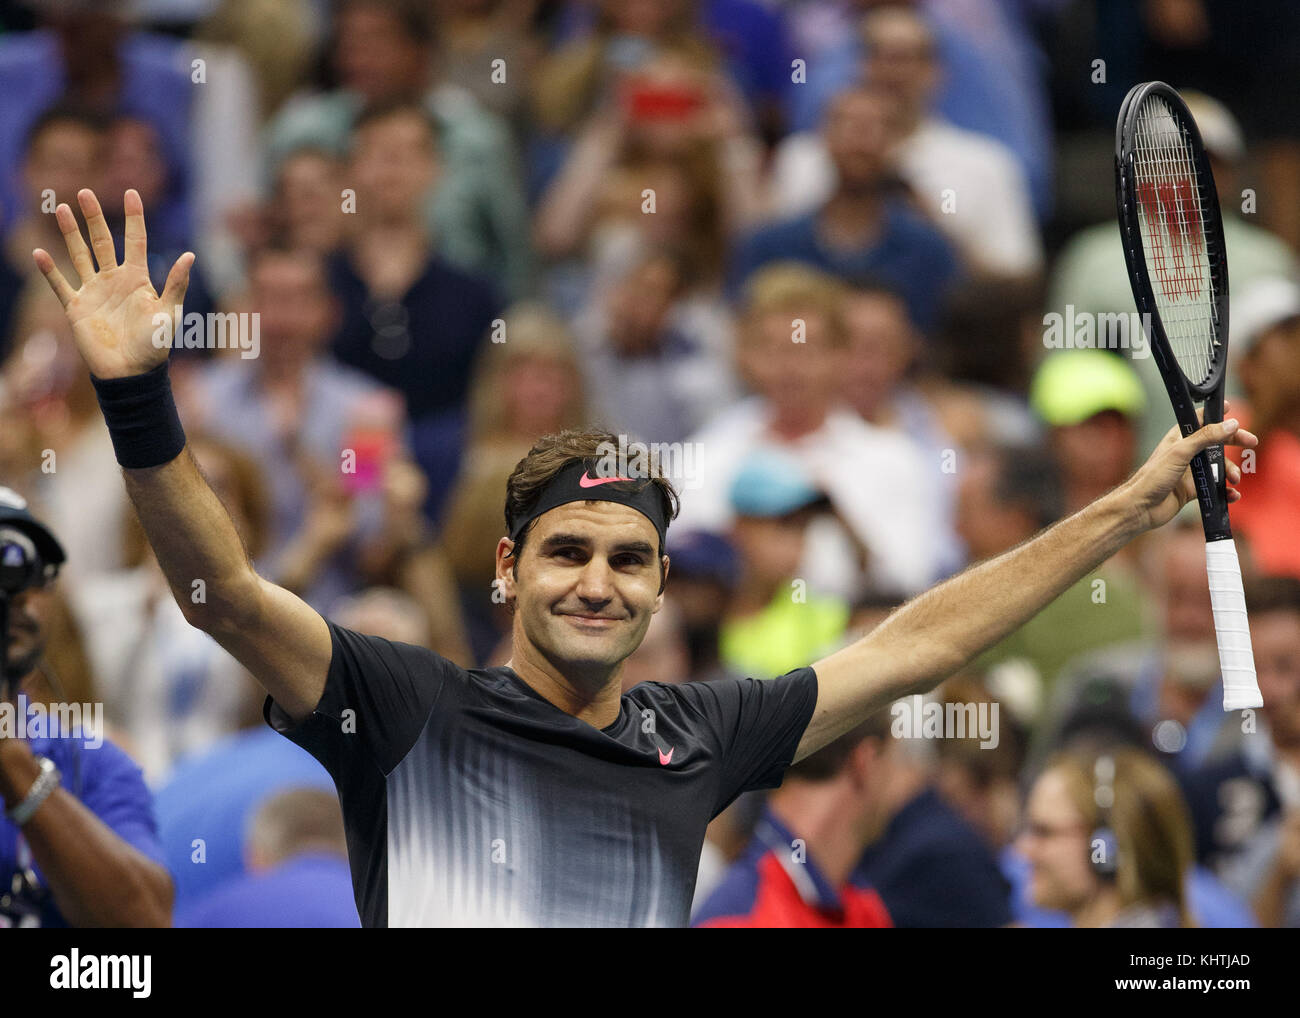 Schweizer Tennisspieler Roger Federer (SUI) feiert am US Open Tennis Championship 2017, New York City, New York, United States. Stockfoto